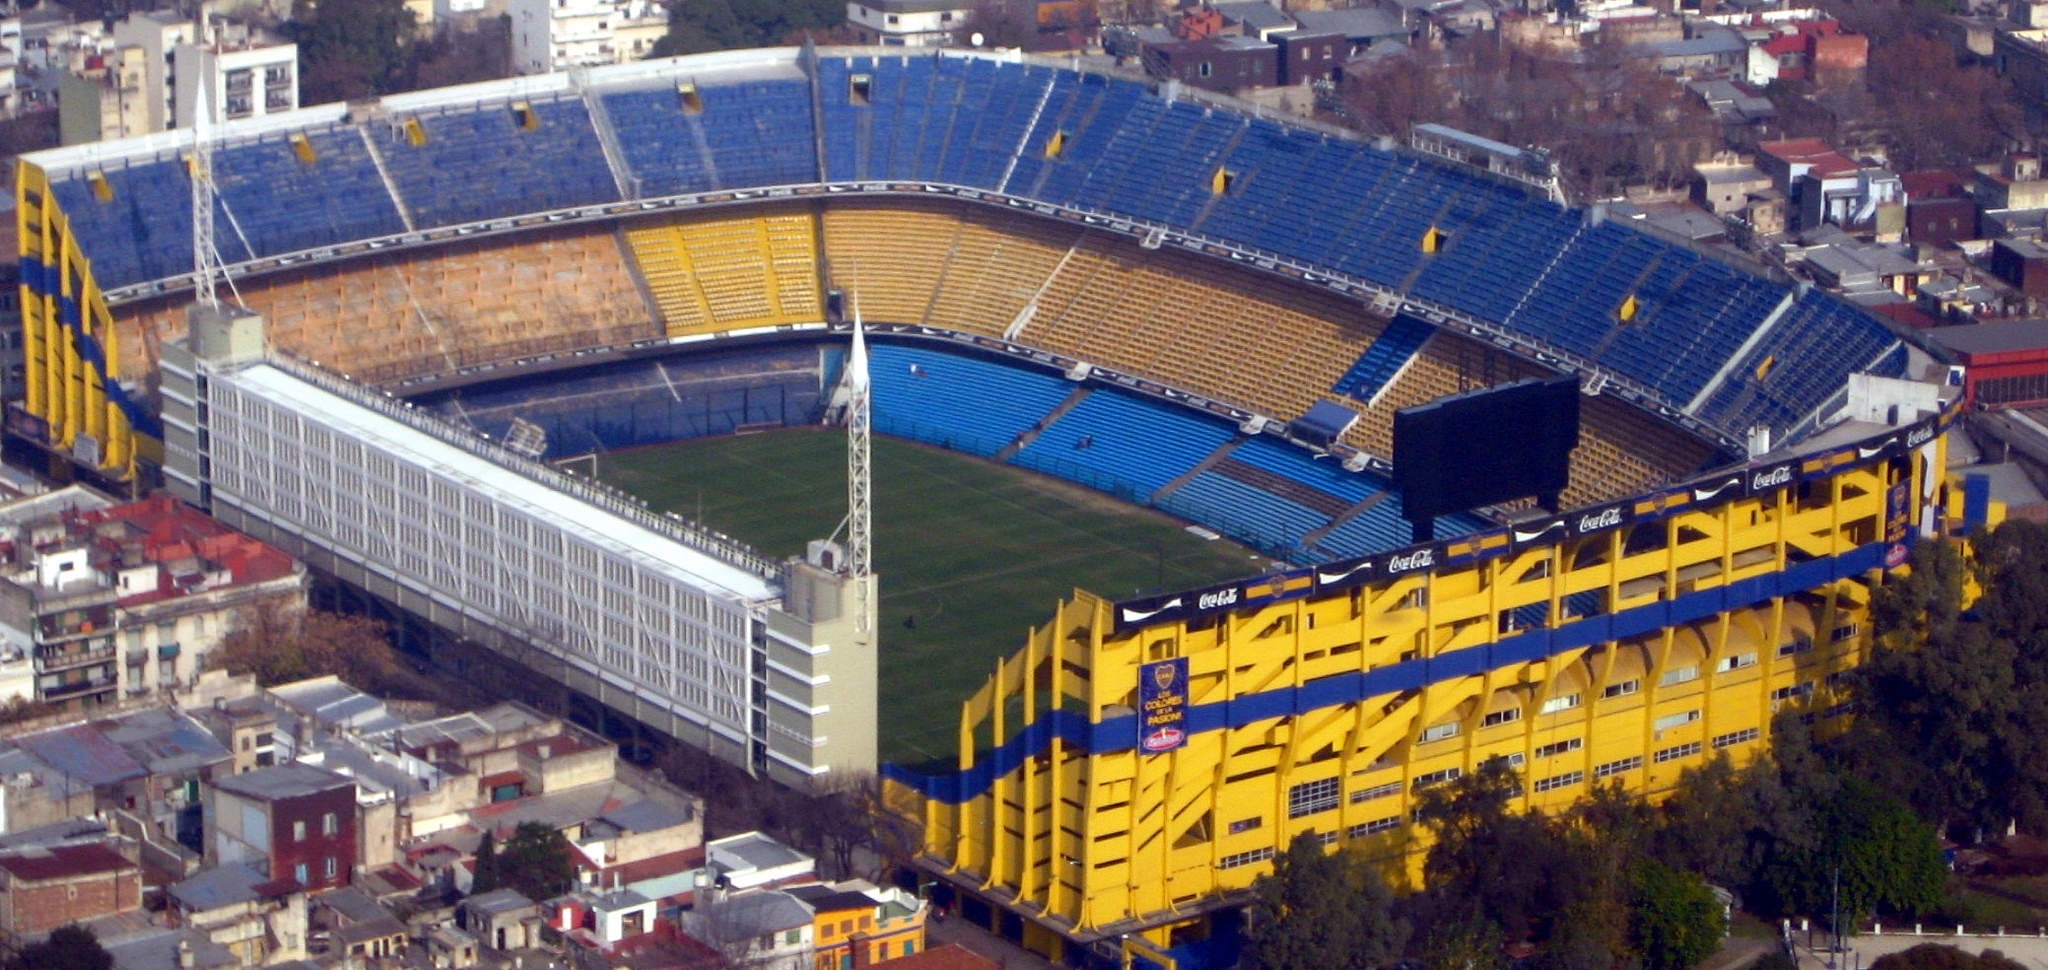 La-Bombonera-stadium-kosher-stand-buenos-aires-argentina